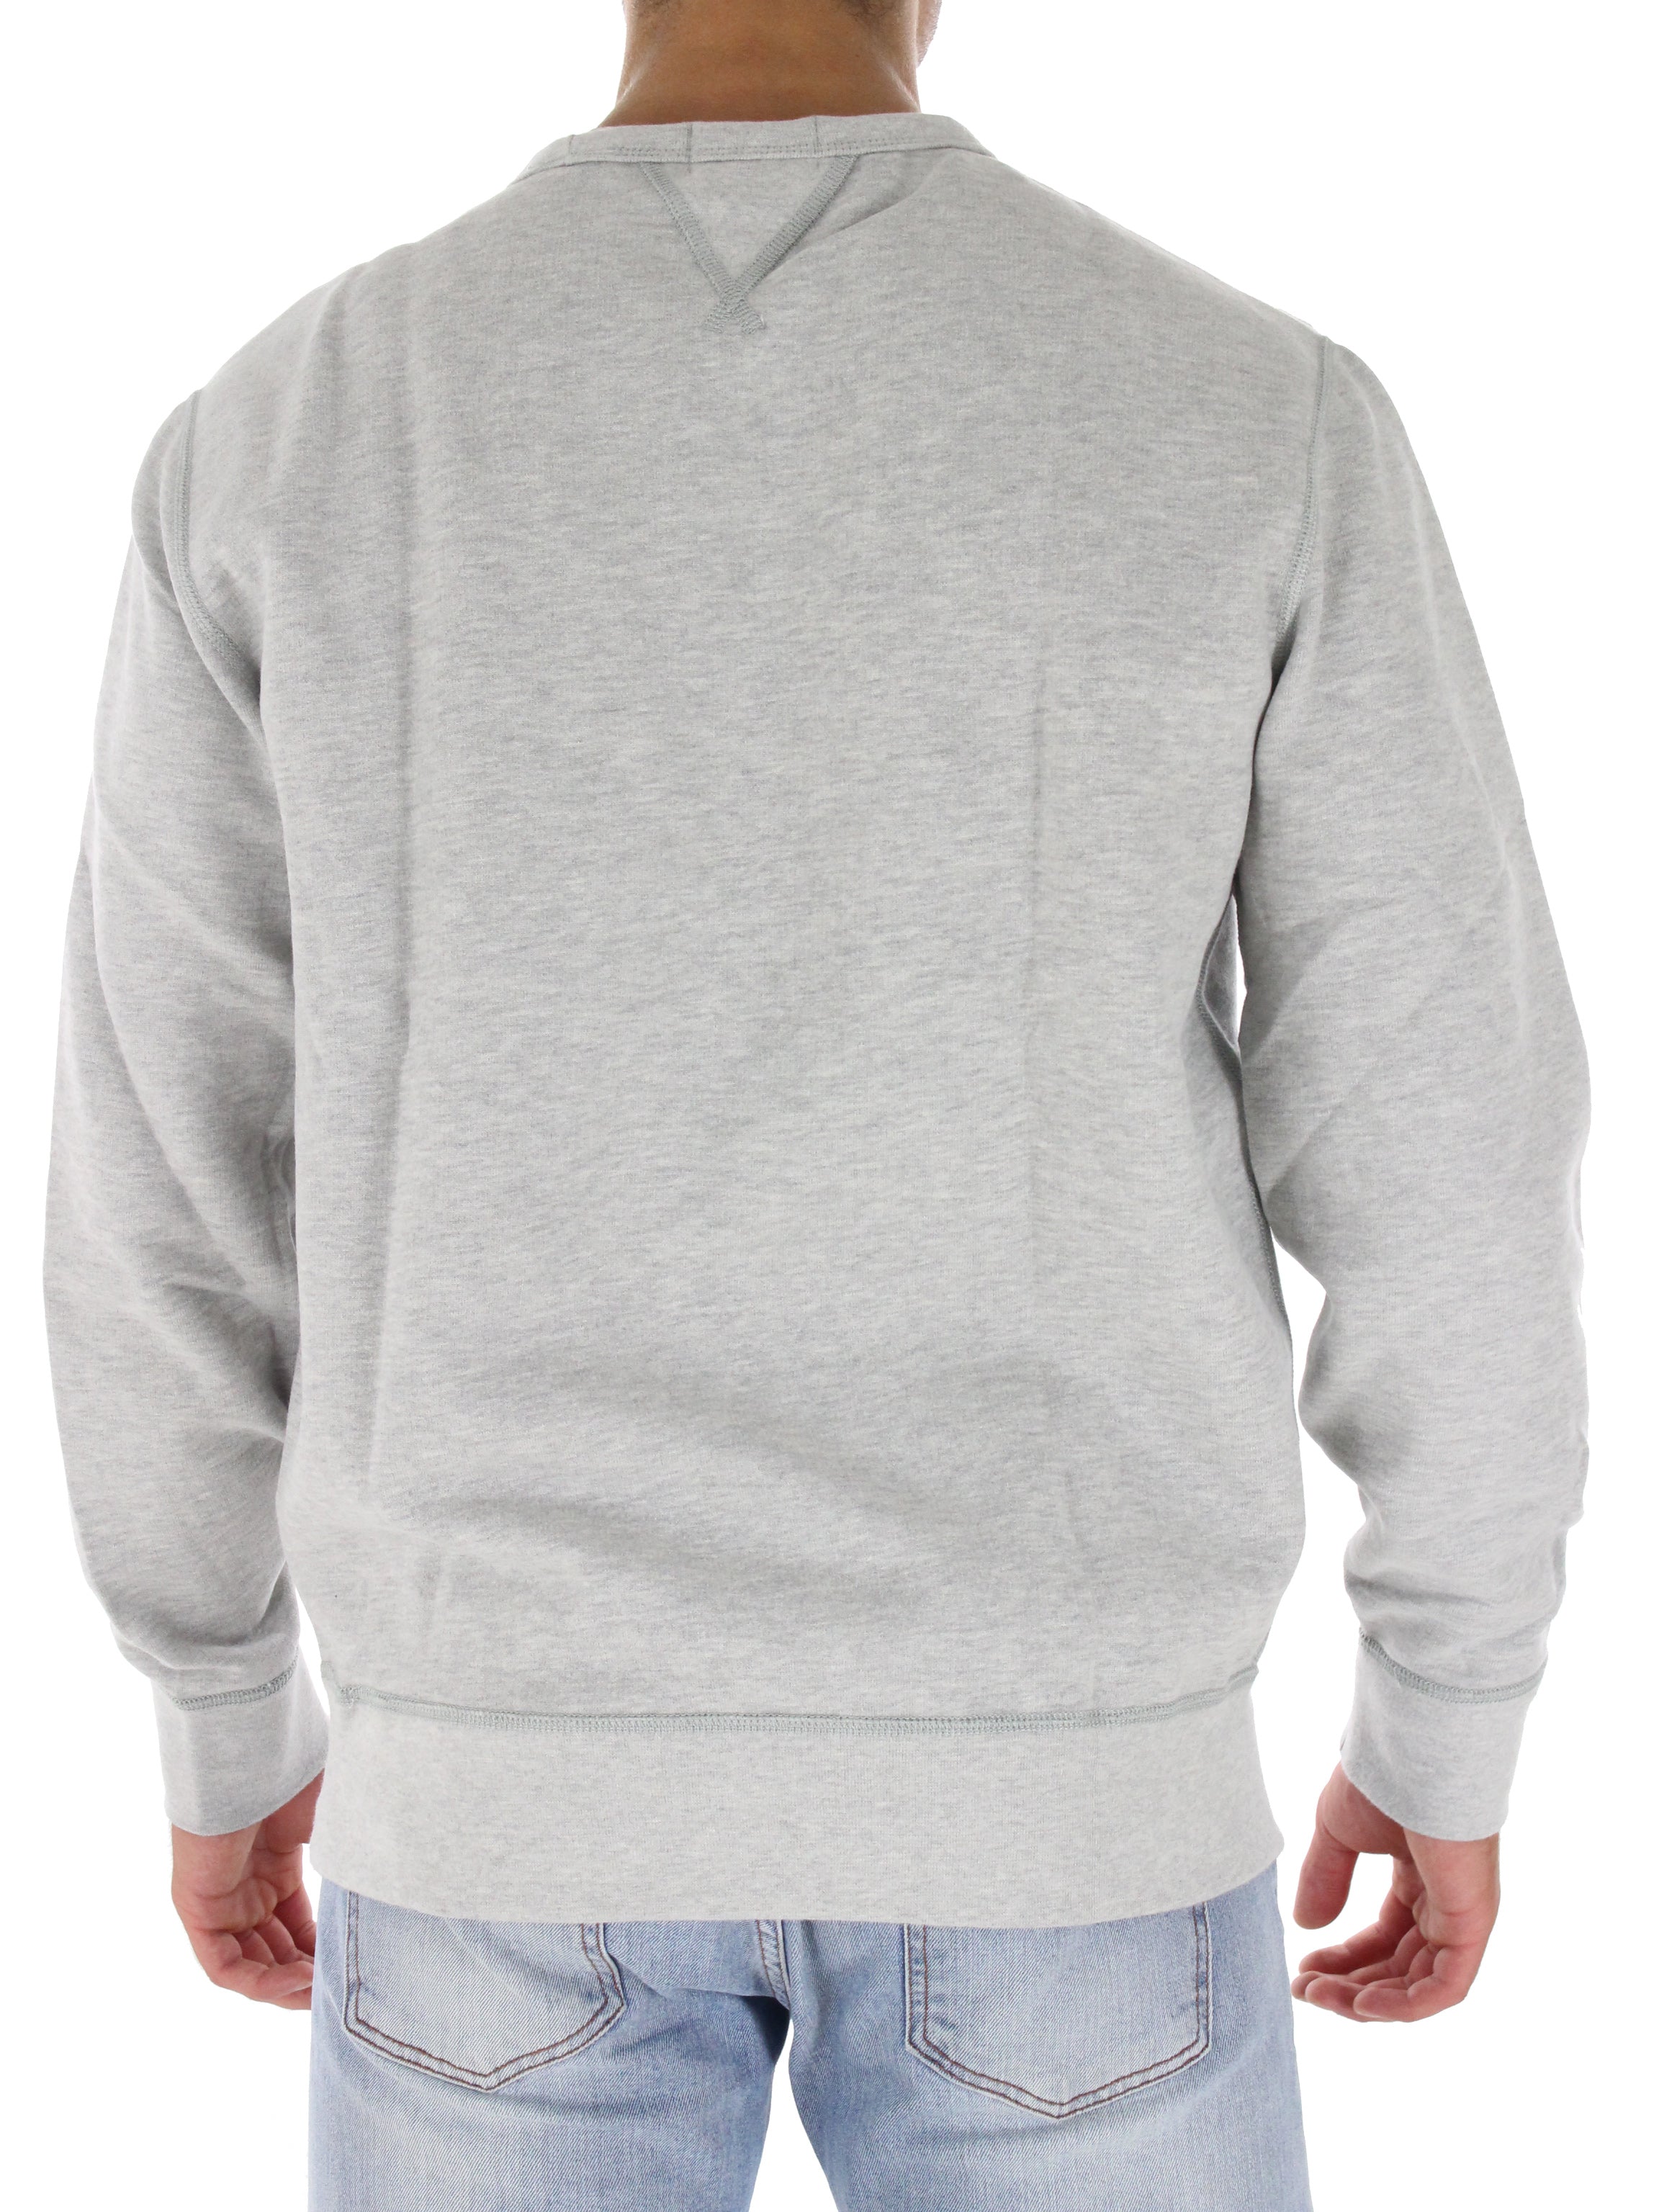 Custom fit 710766772 light gray sweatshirt